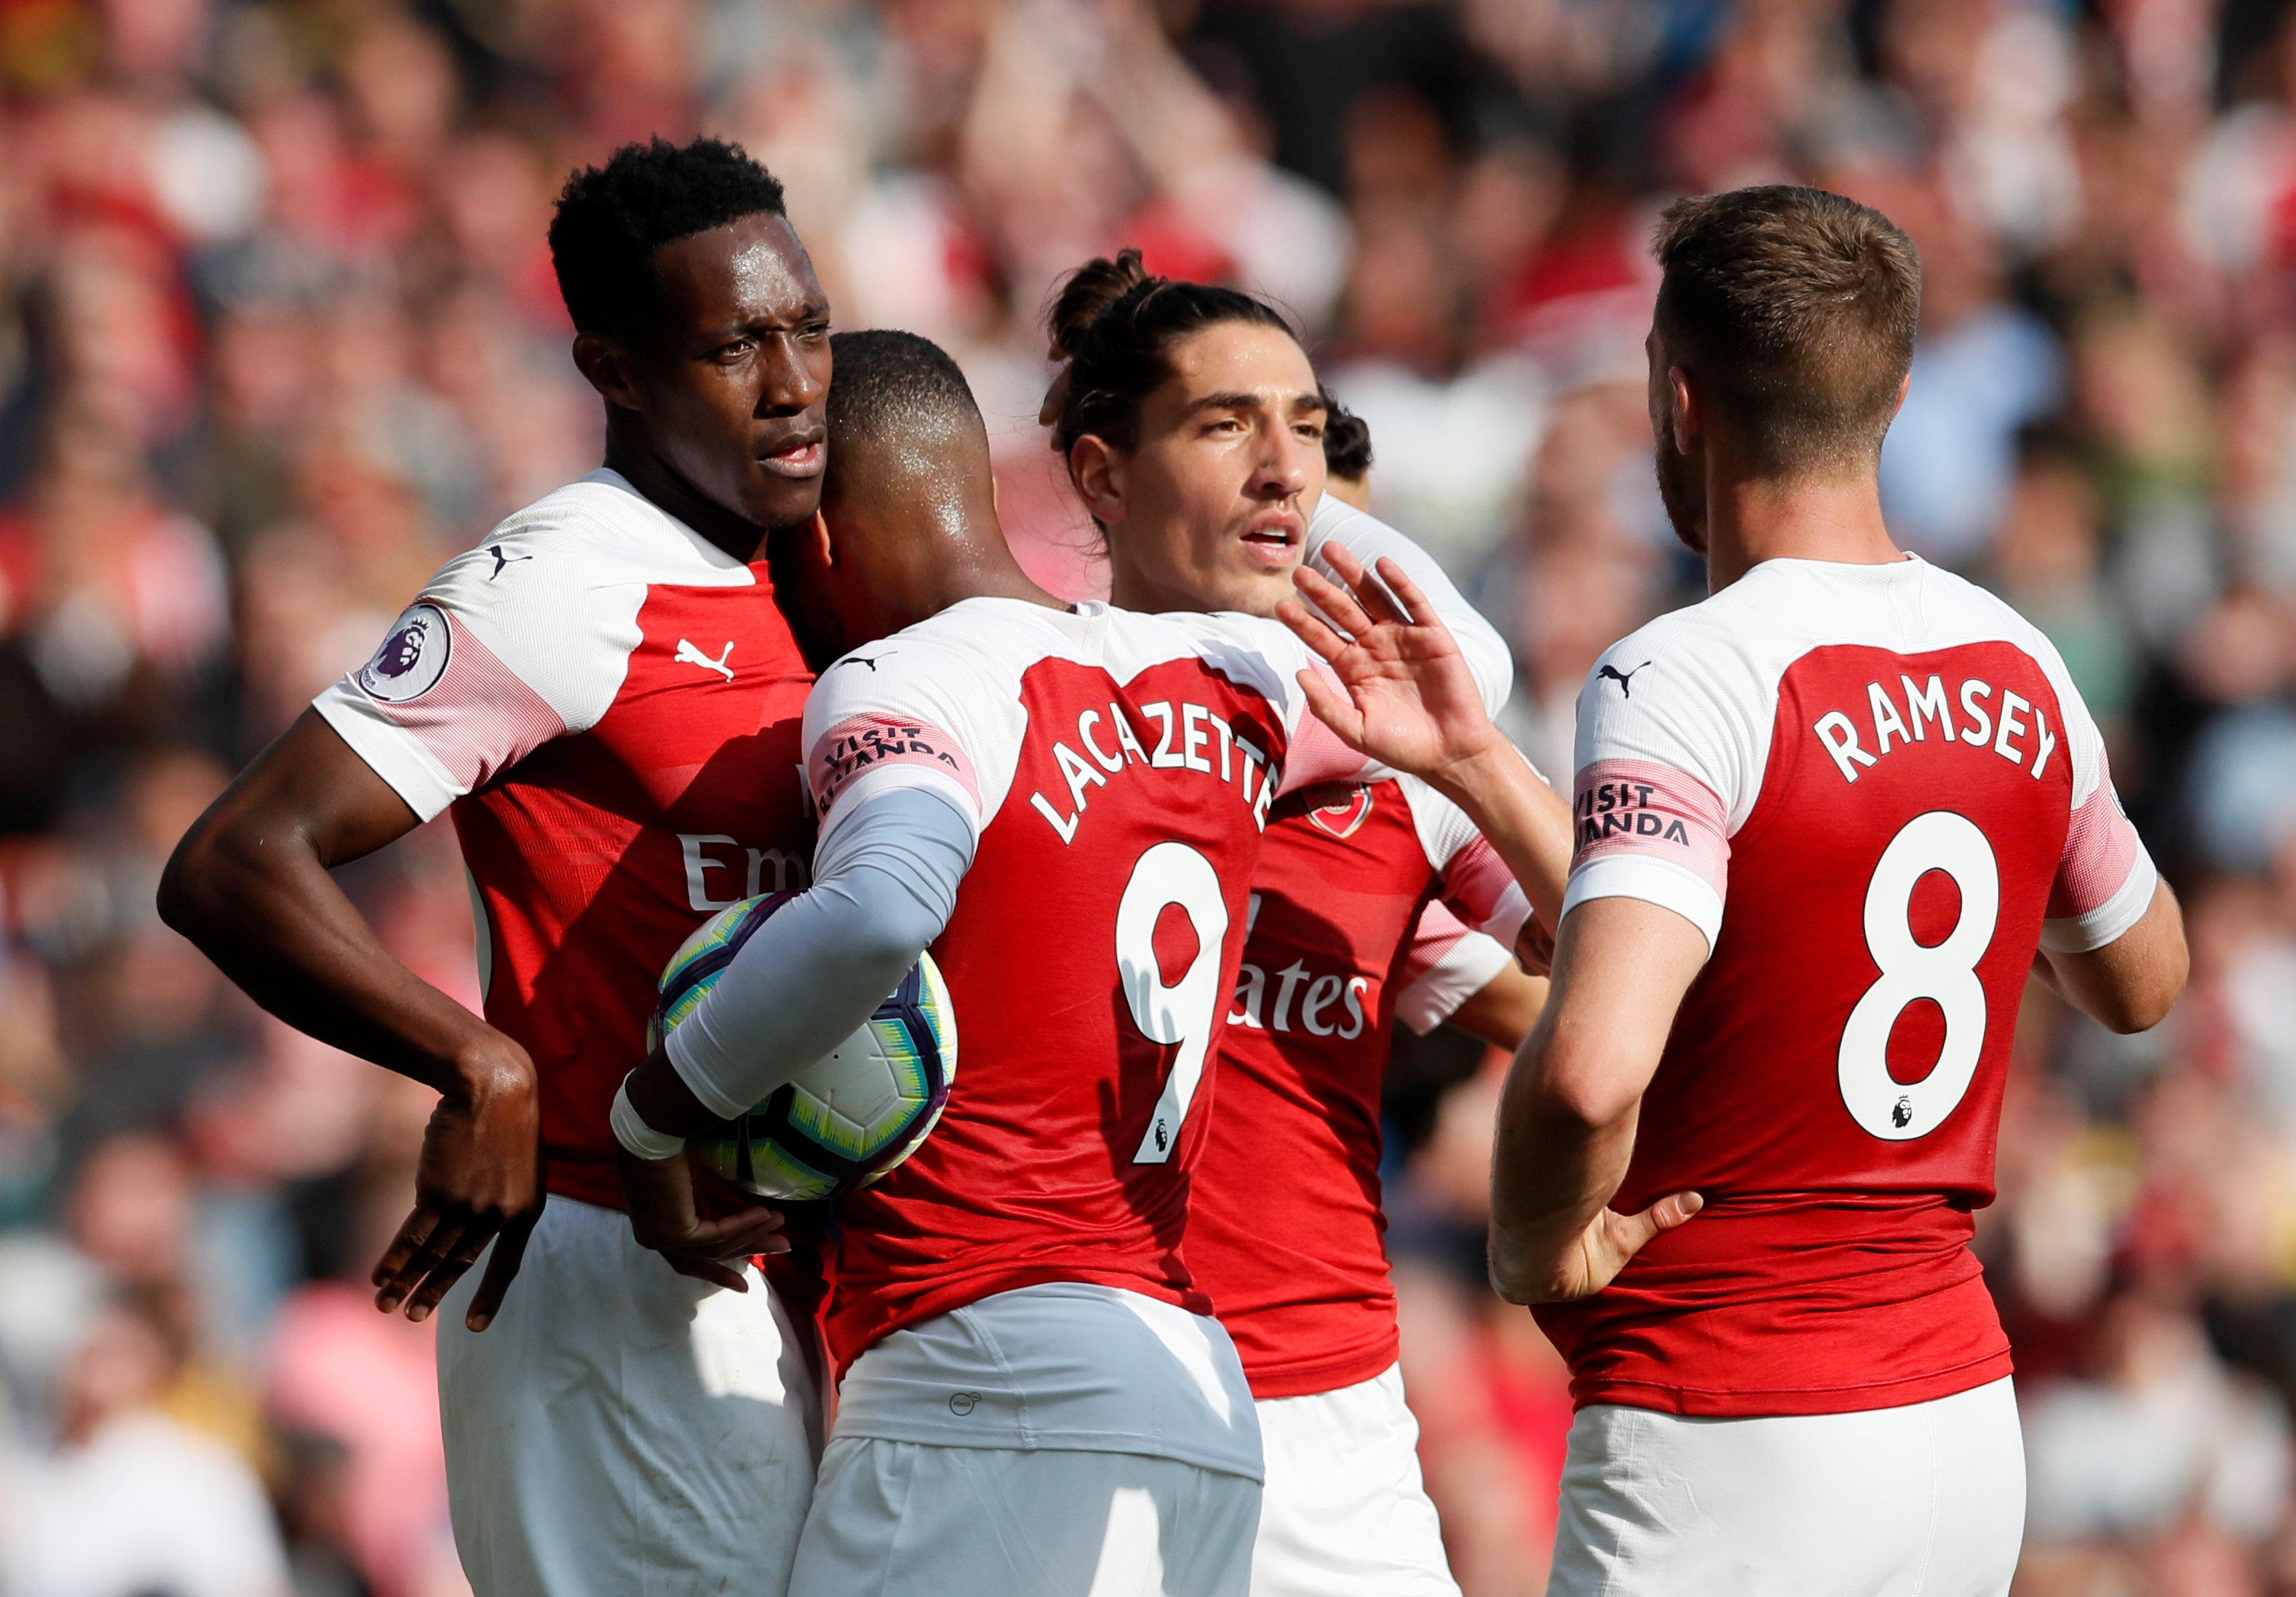 Football: Emery off the mark as Arsenal beat West Ham